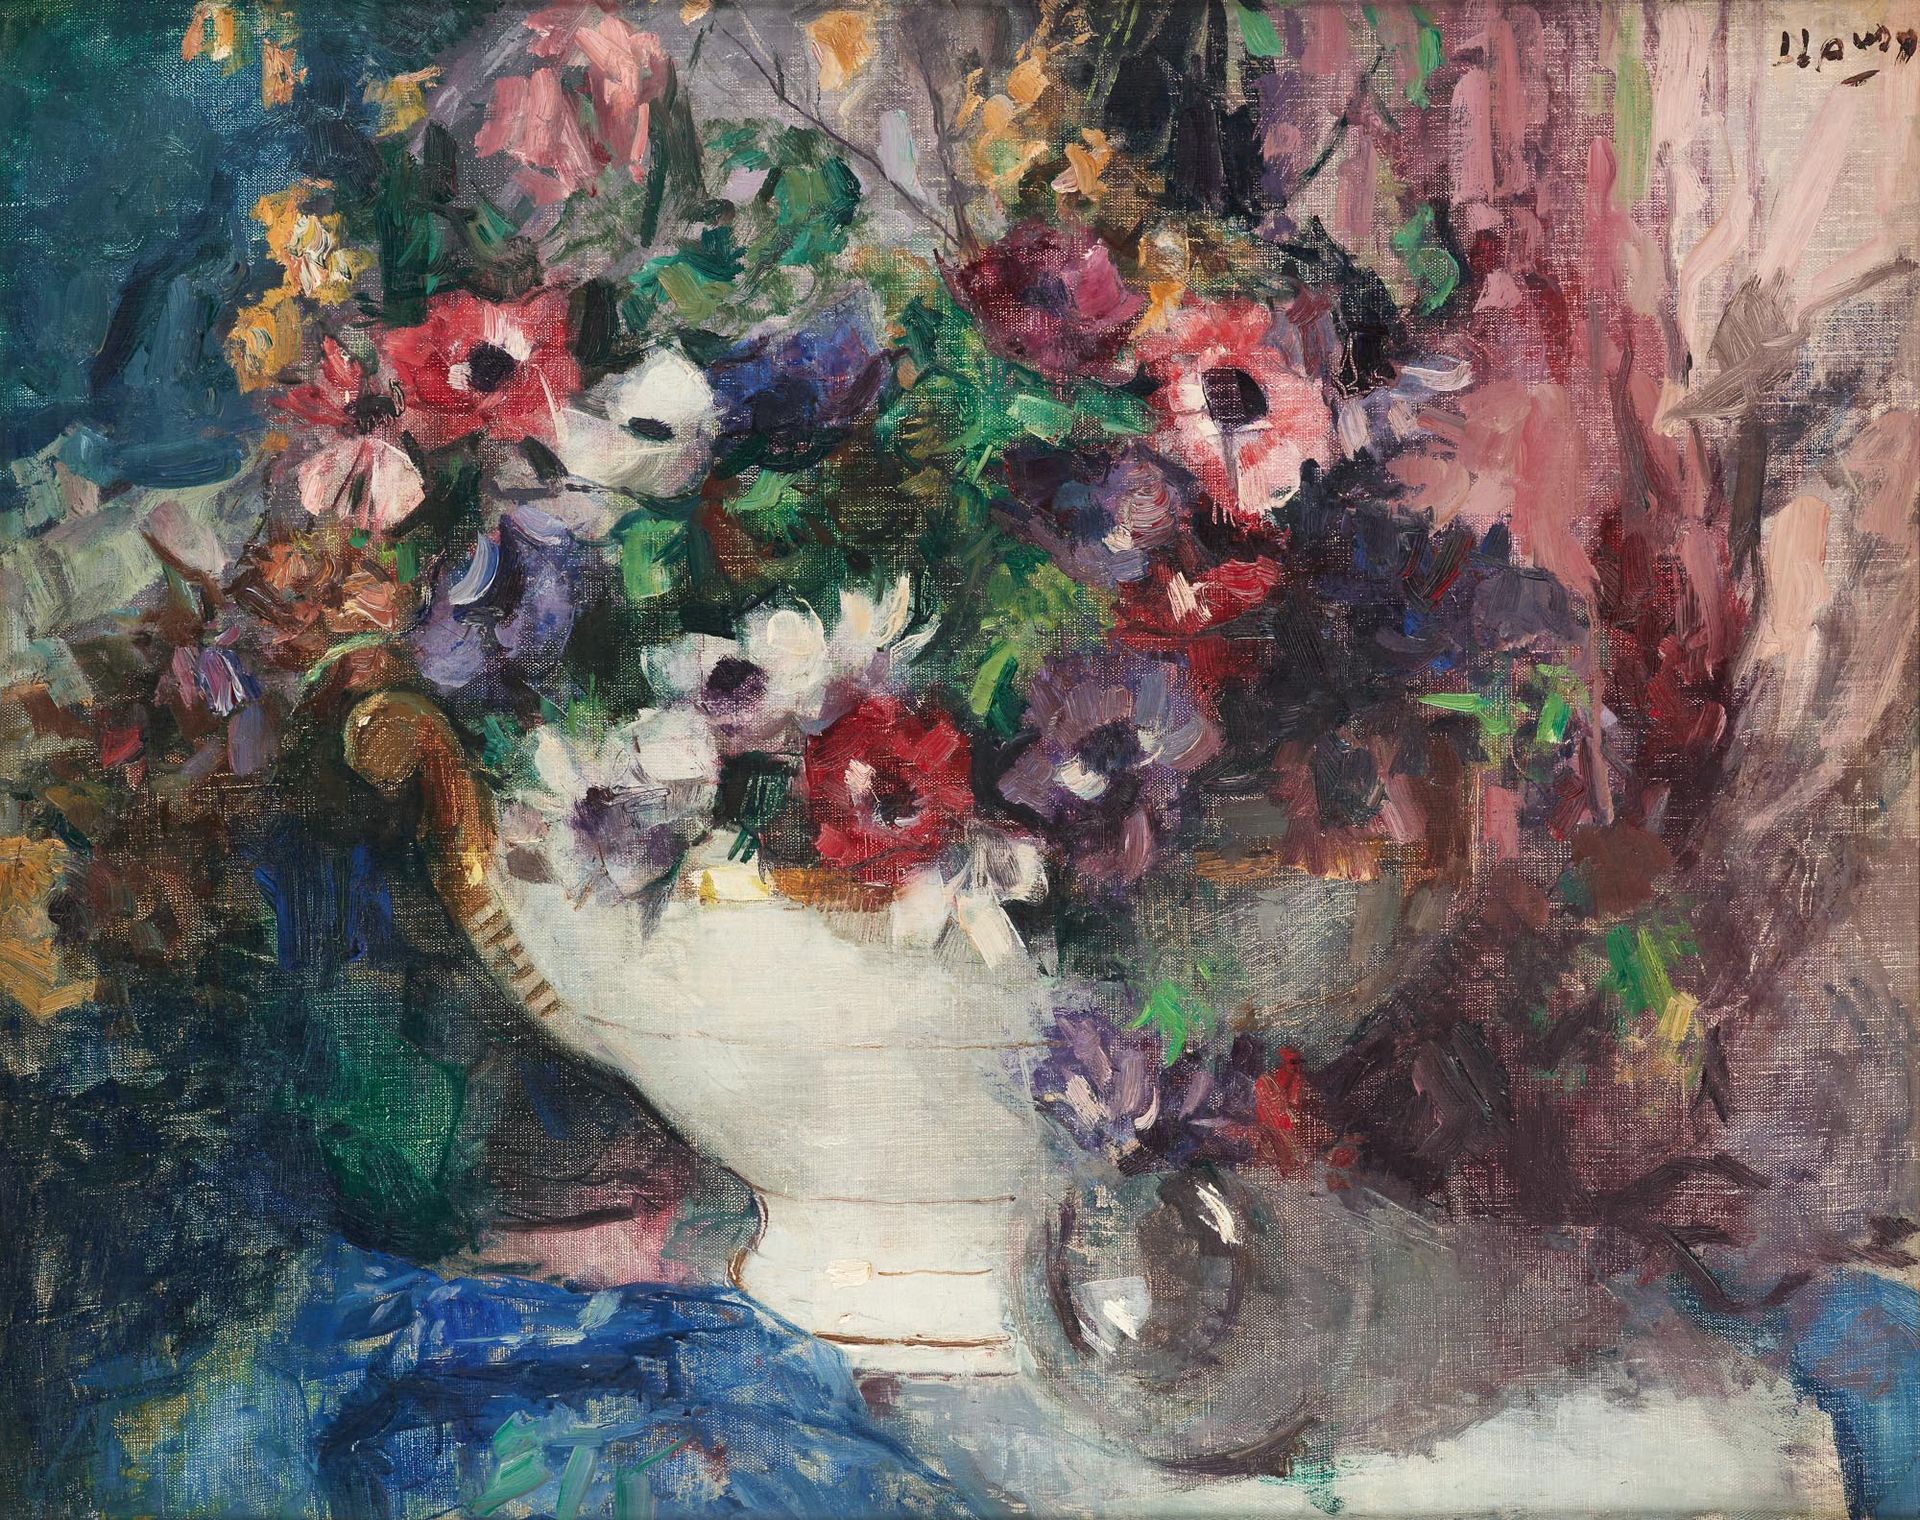 Jean LAUDY École belge (1877-1956) 布面油画：夹板上的花卉构图。

签名：J. Laudy。

尺寸：60 x 73,5厘米。